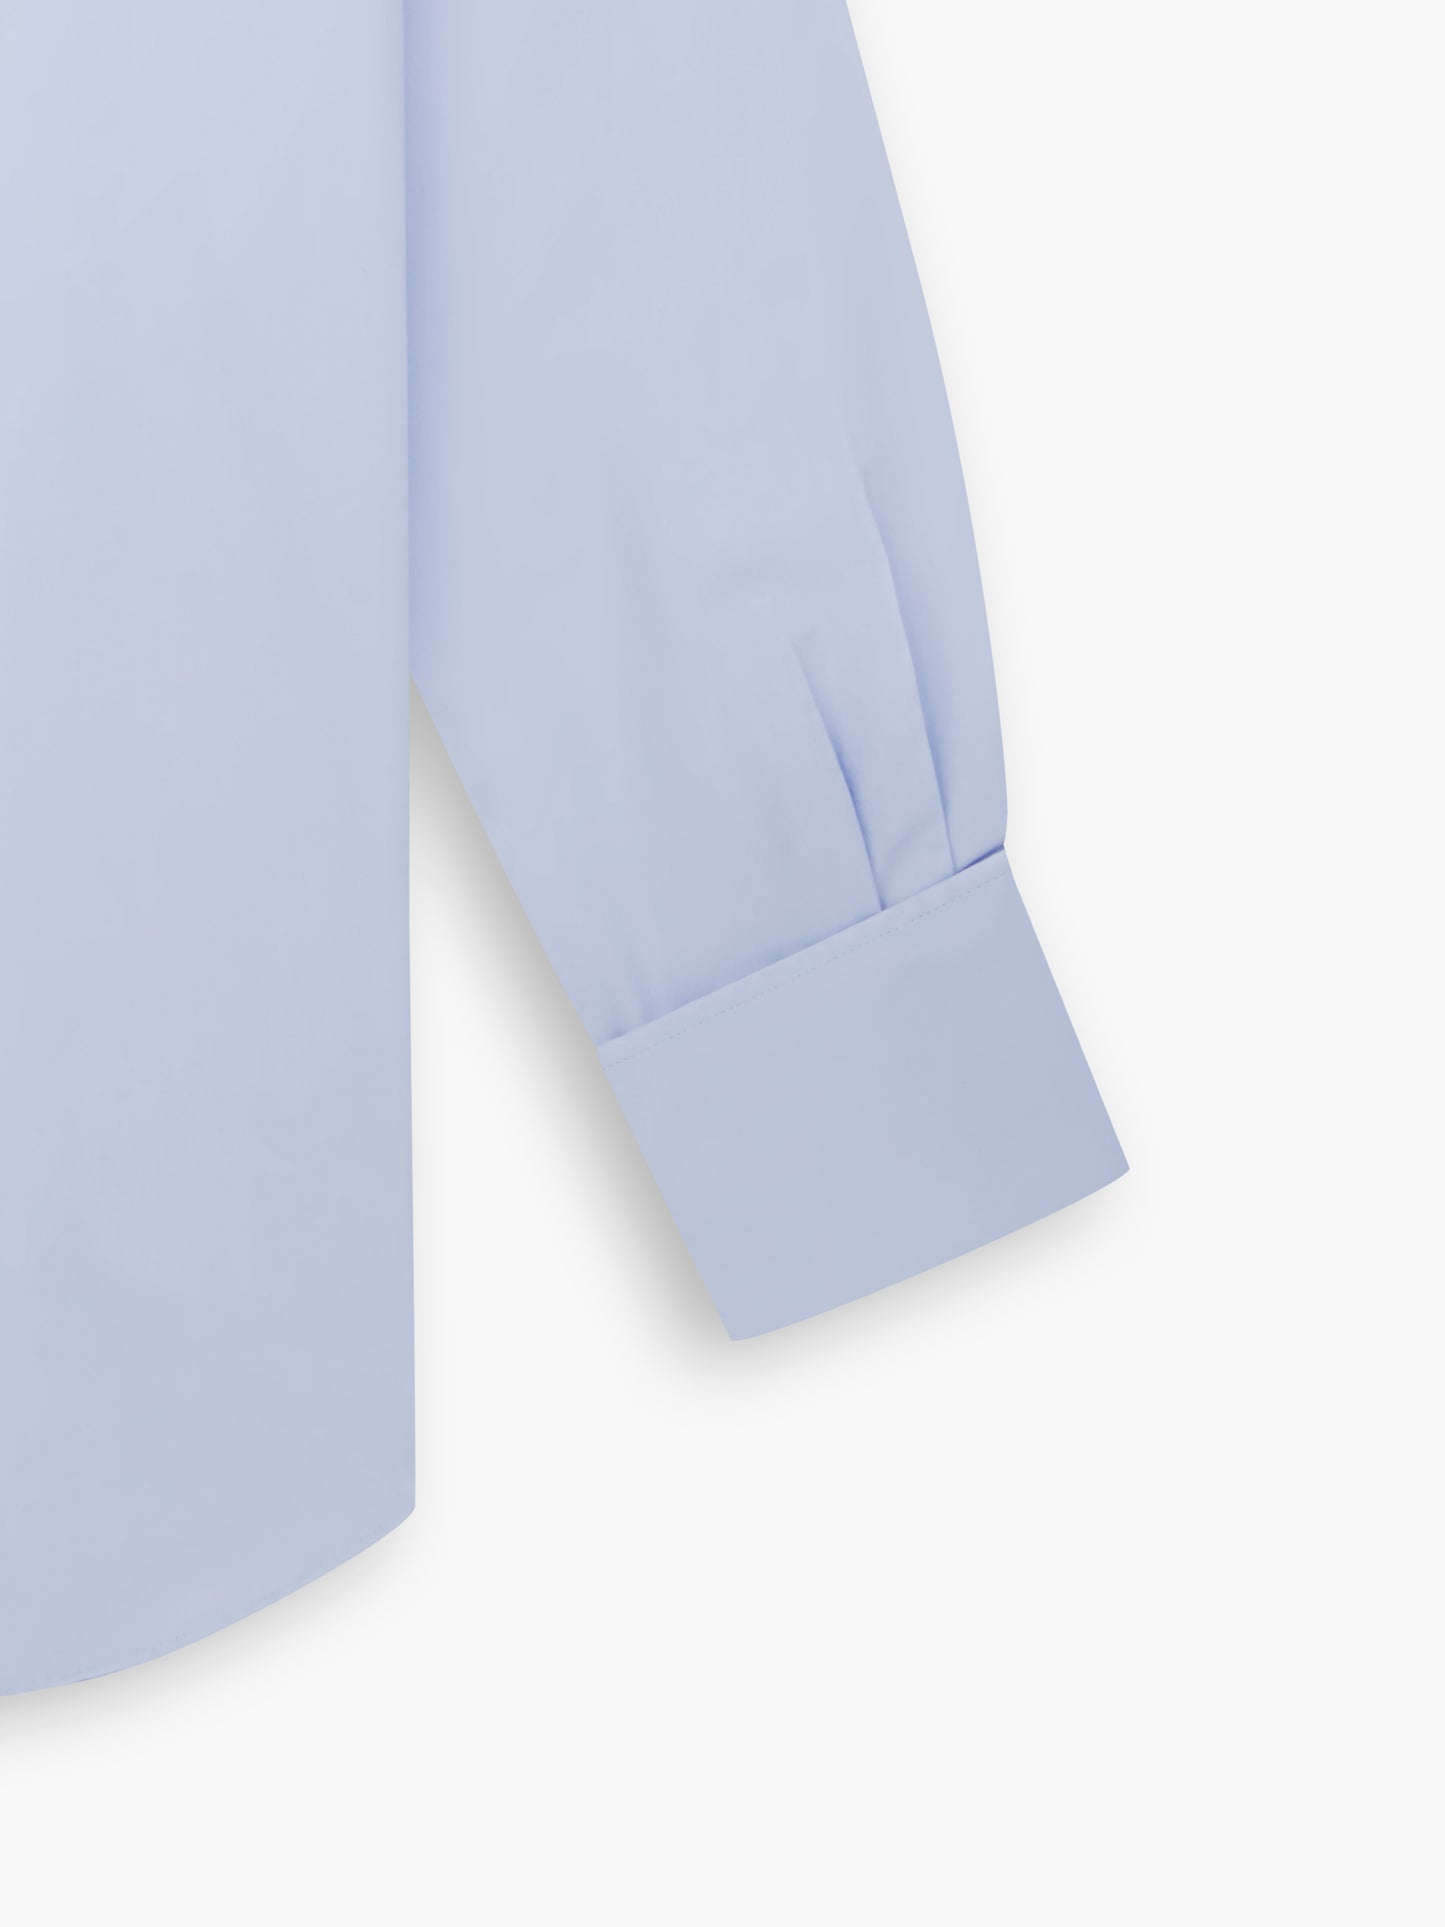 Non-Iron Blue Poplin Regular Fit Double Cuff Classic Collar Shirt